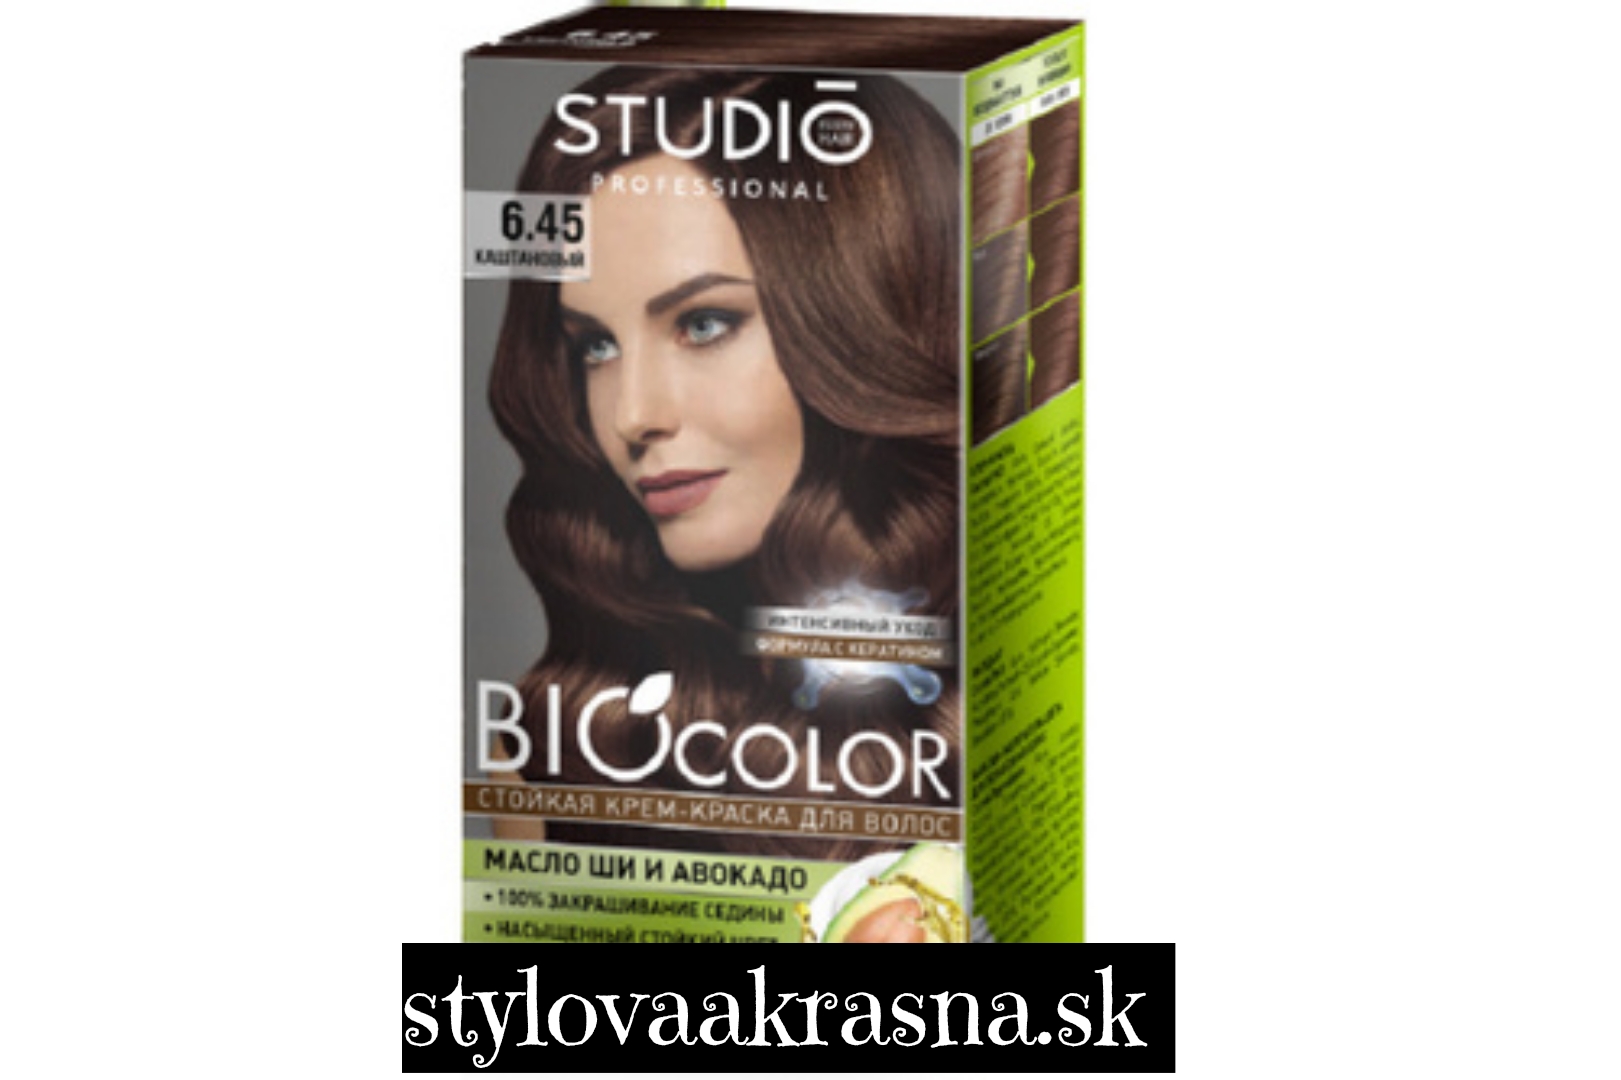 STUDIO BIOCOLOR farba na vlasy 6.45 gaštan 